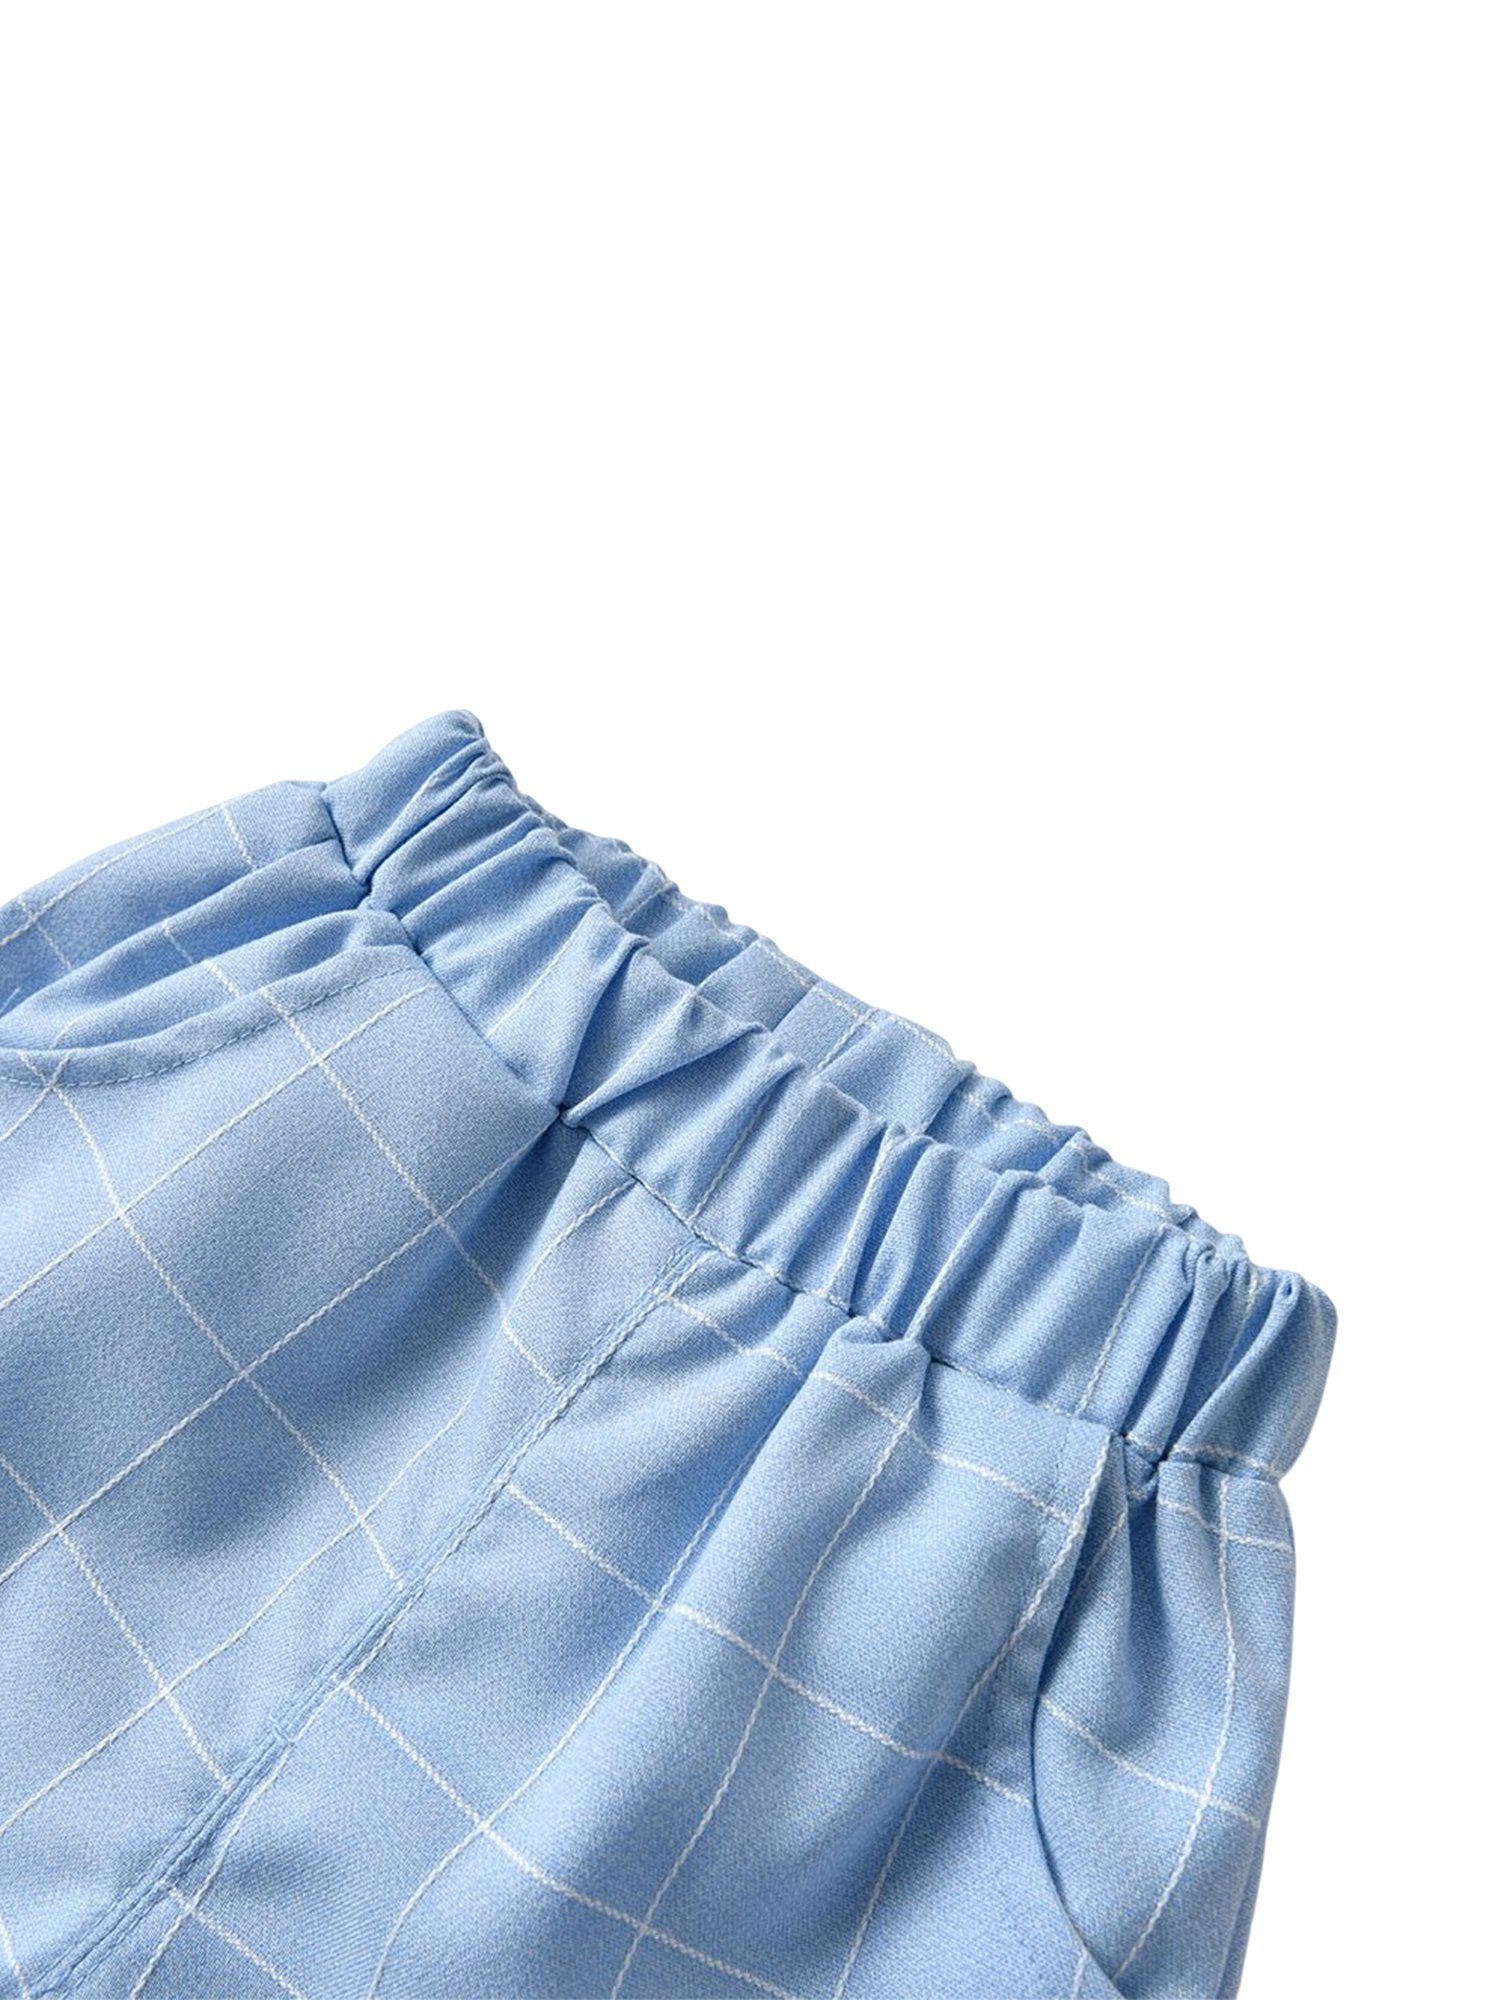 Lapastyle Anzug Baby Jungen Blau Hose, dreiteiliges Set Weste, Langarm-Shirt